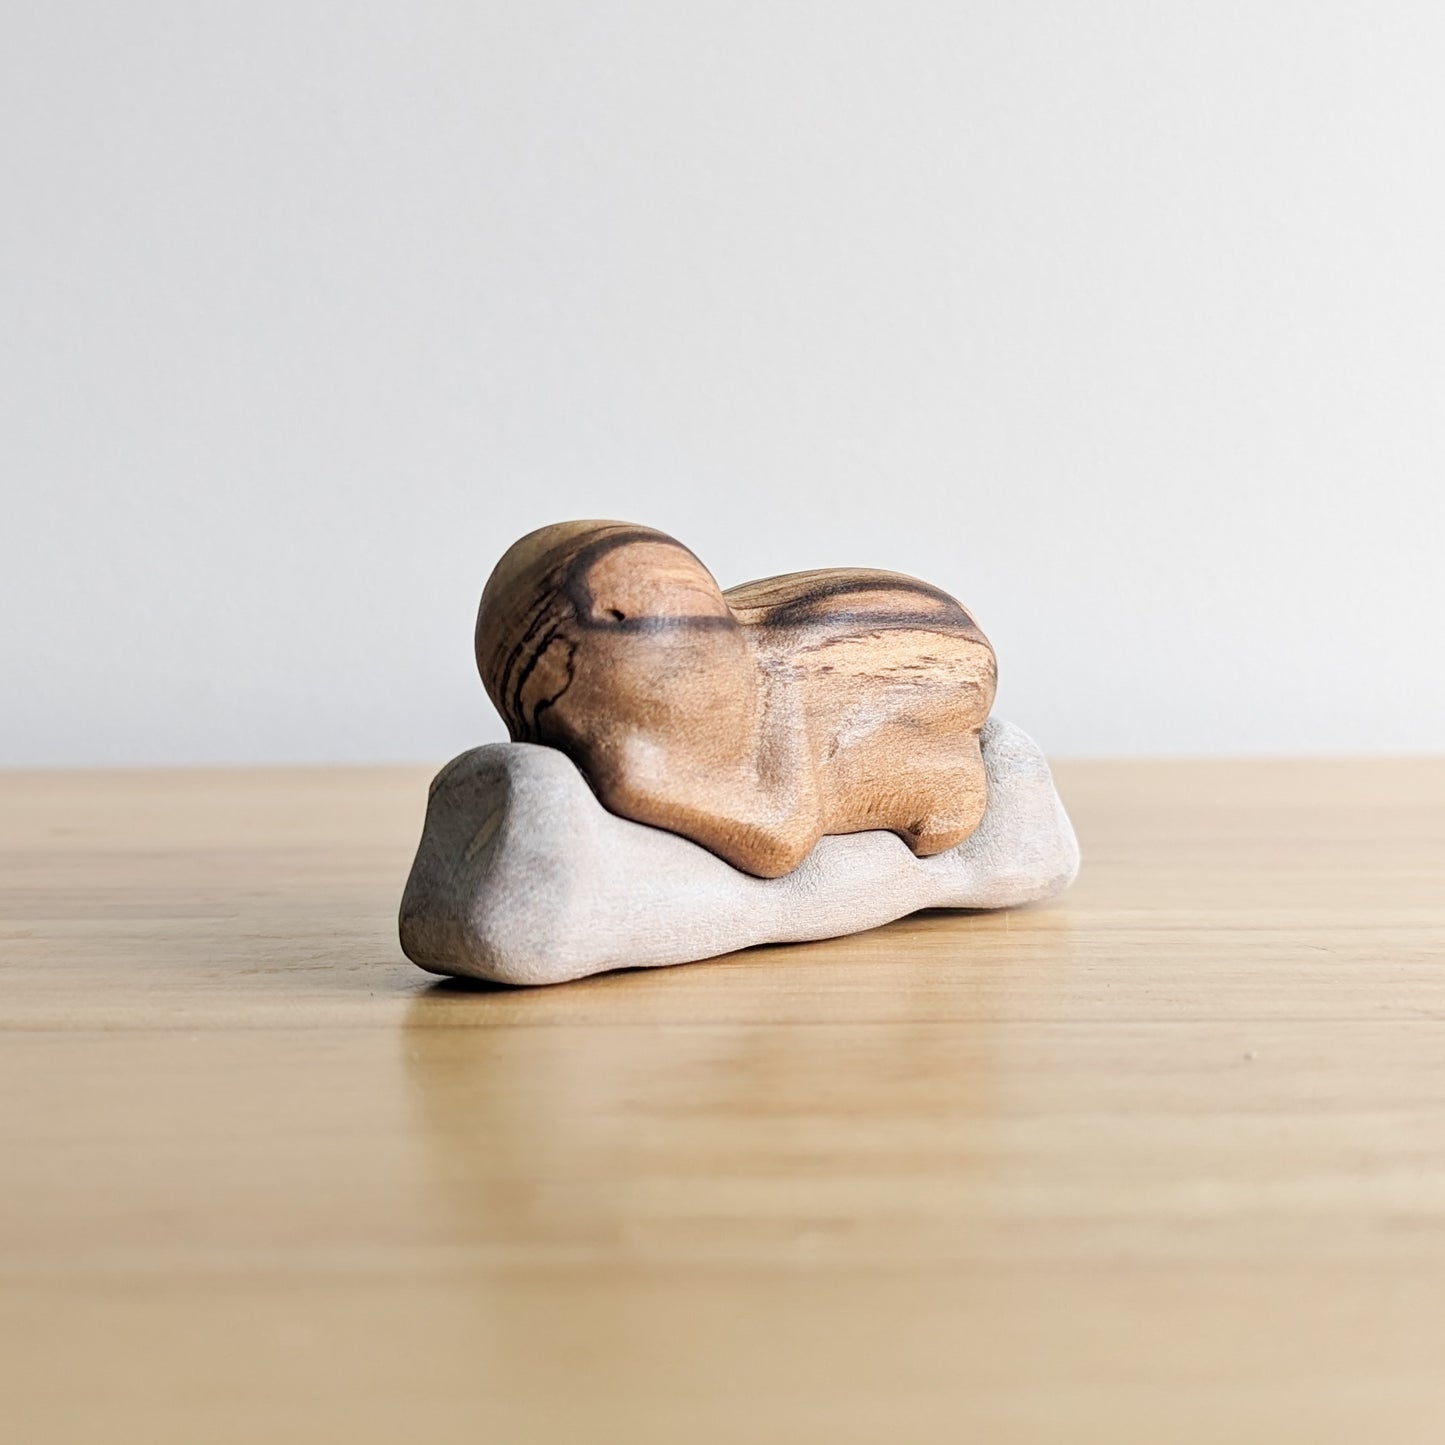 Sleeping Baby Sculpture - Sassafras Wood